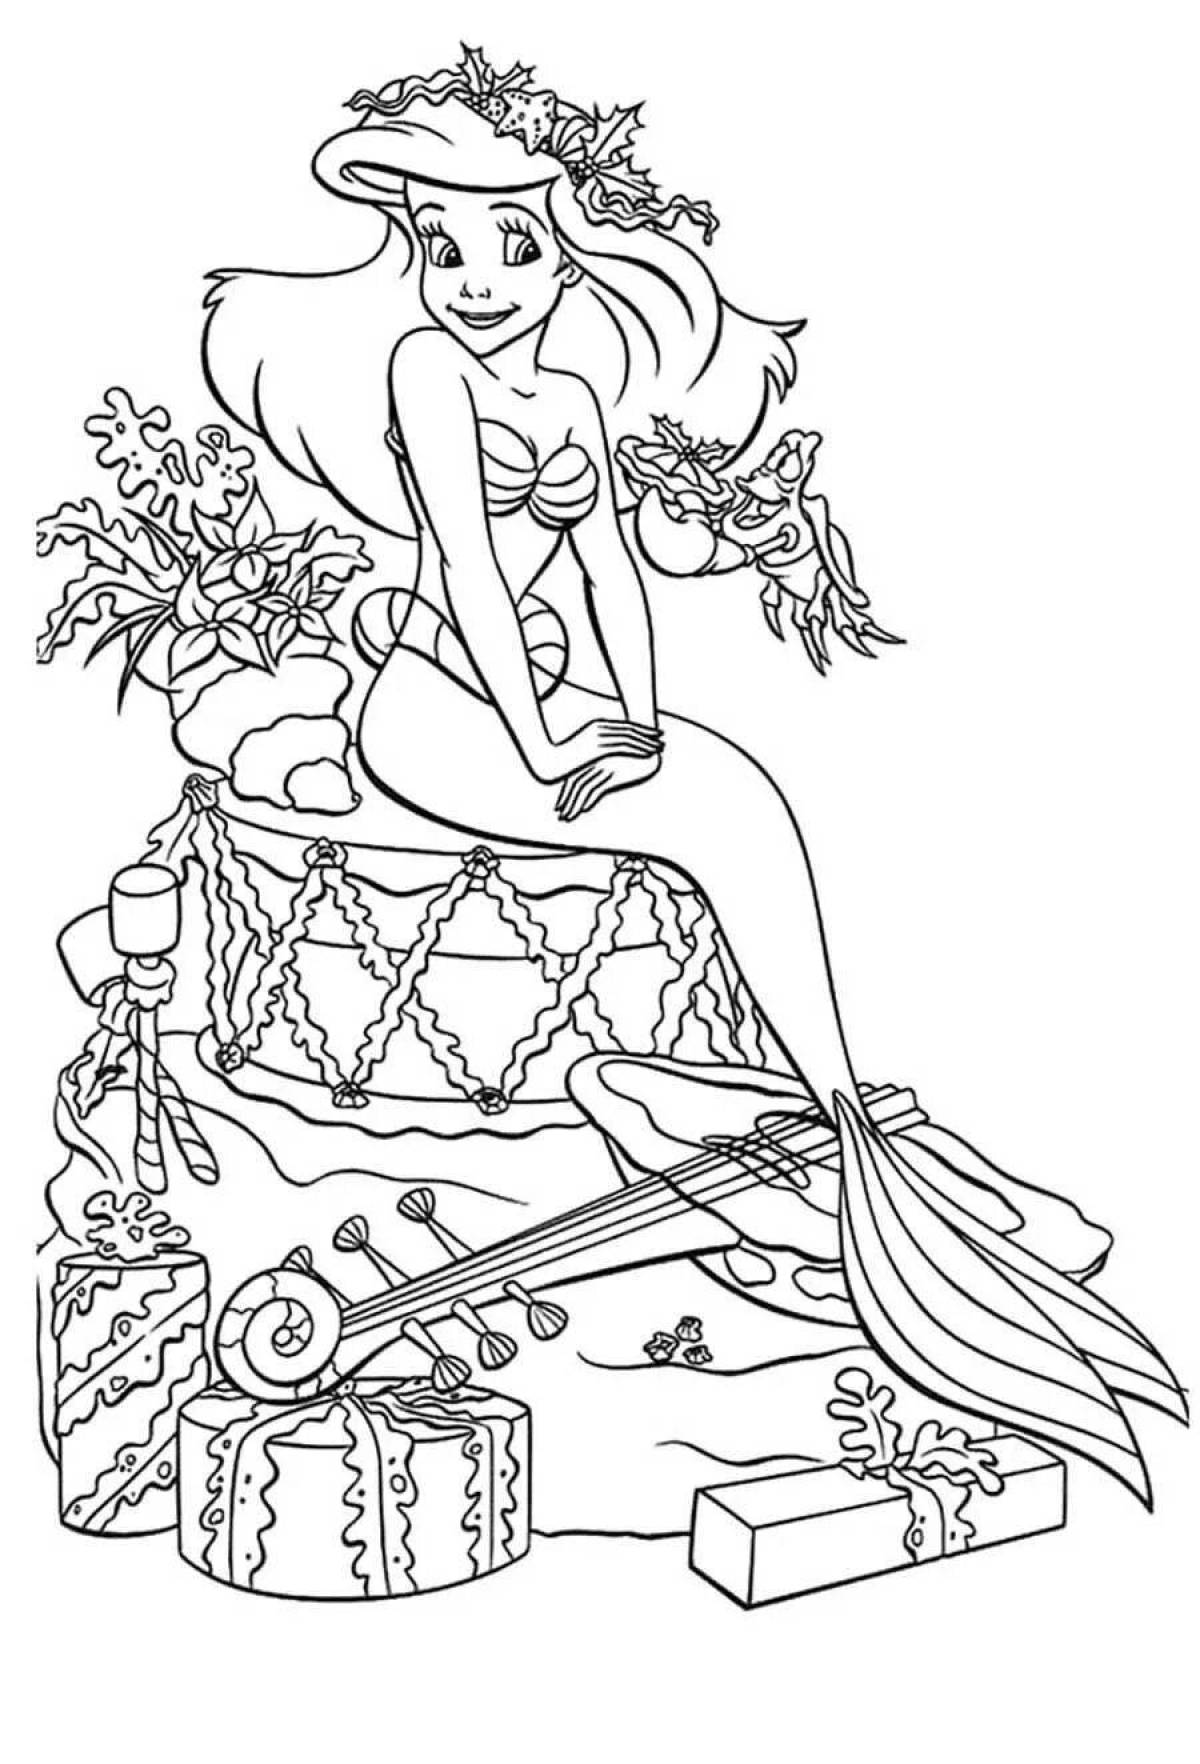 Adorable mermaid princess coloring book